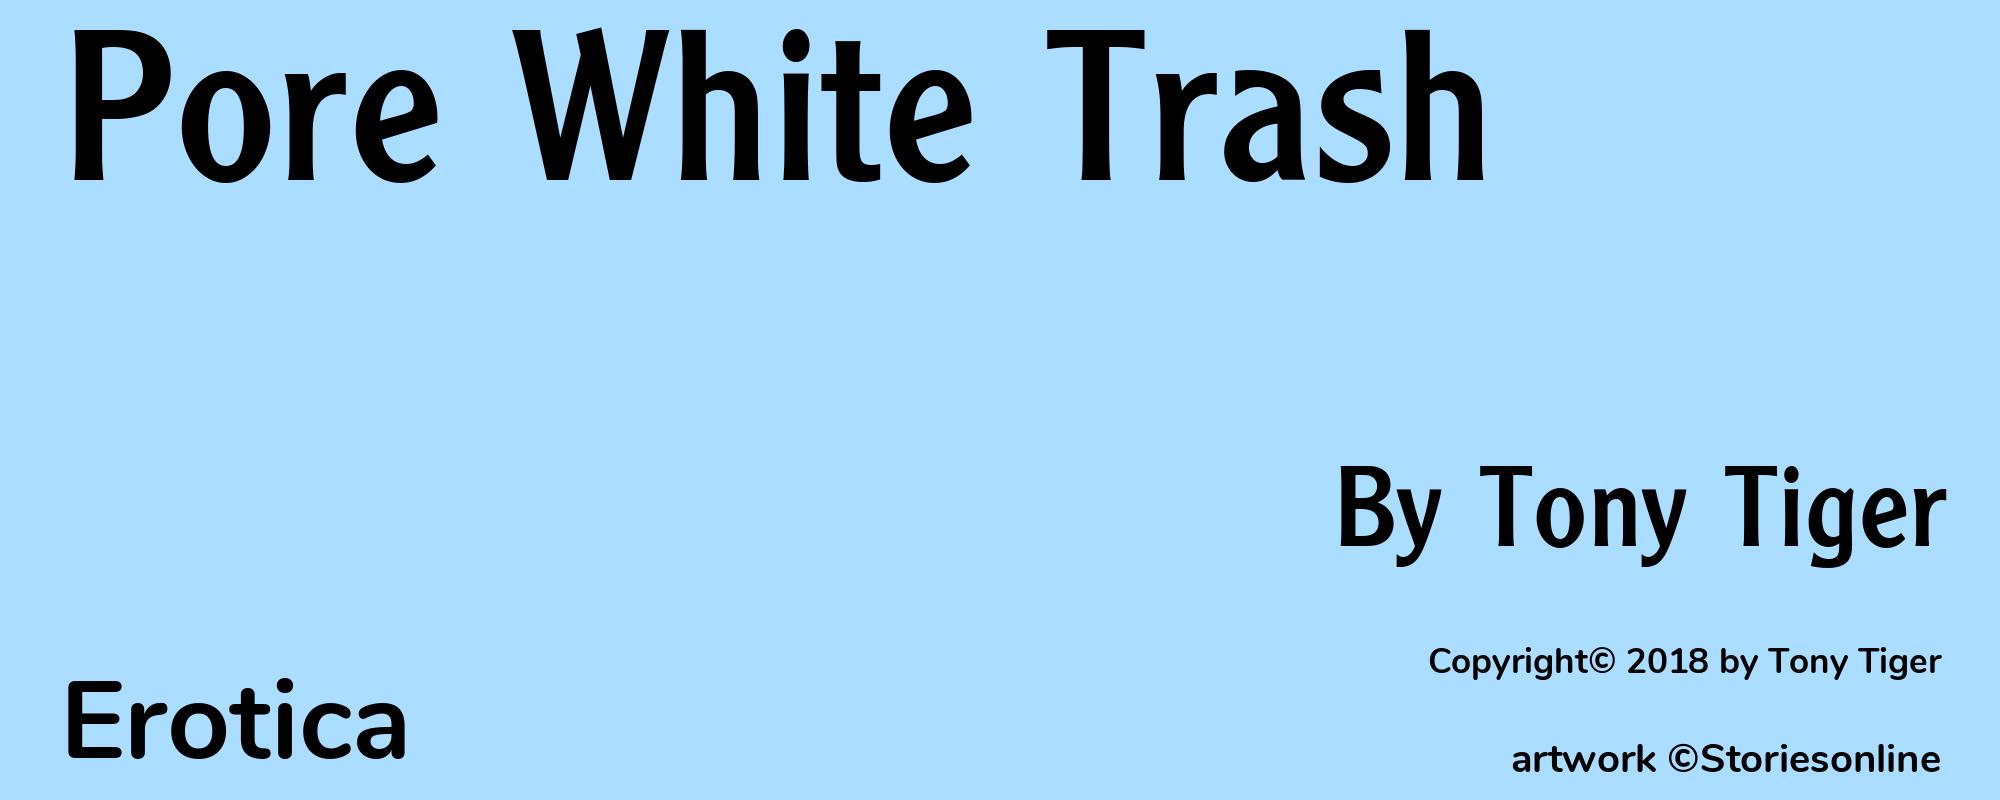 Pore White Trash - Cover